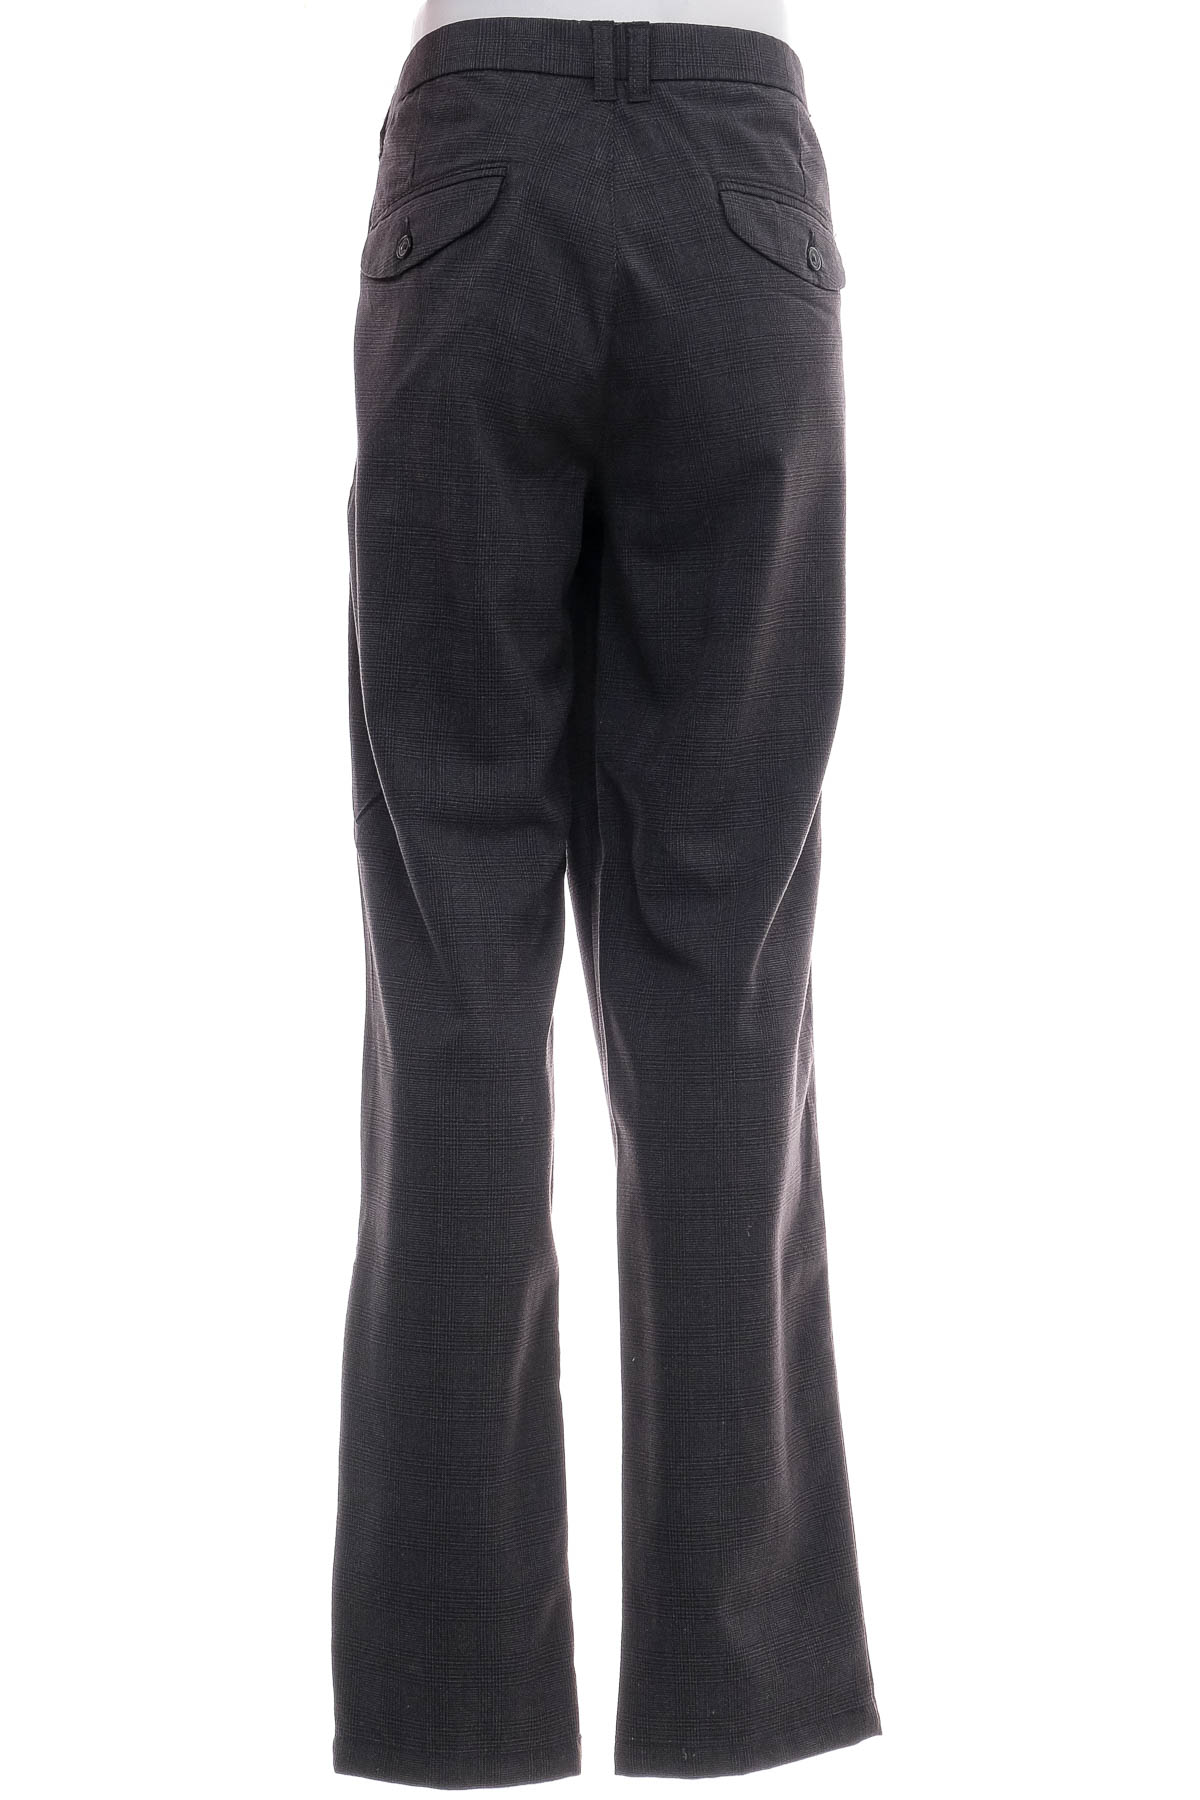 Men's trousers - Royal Class - 1